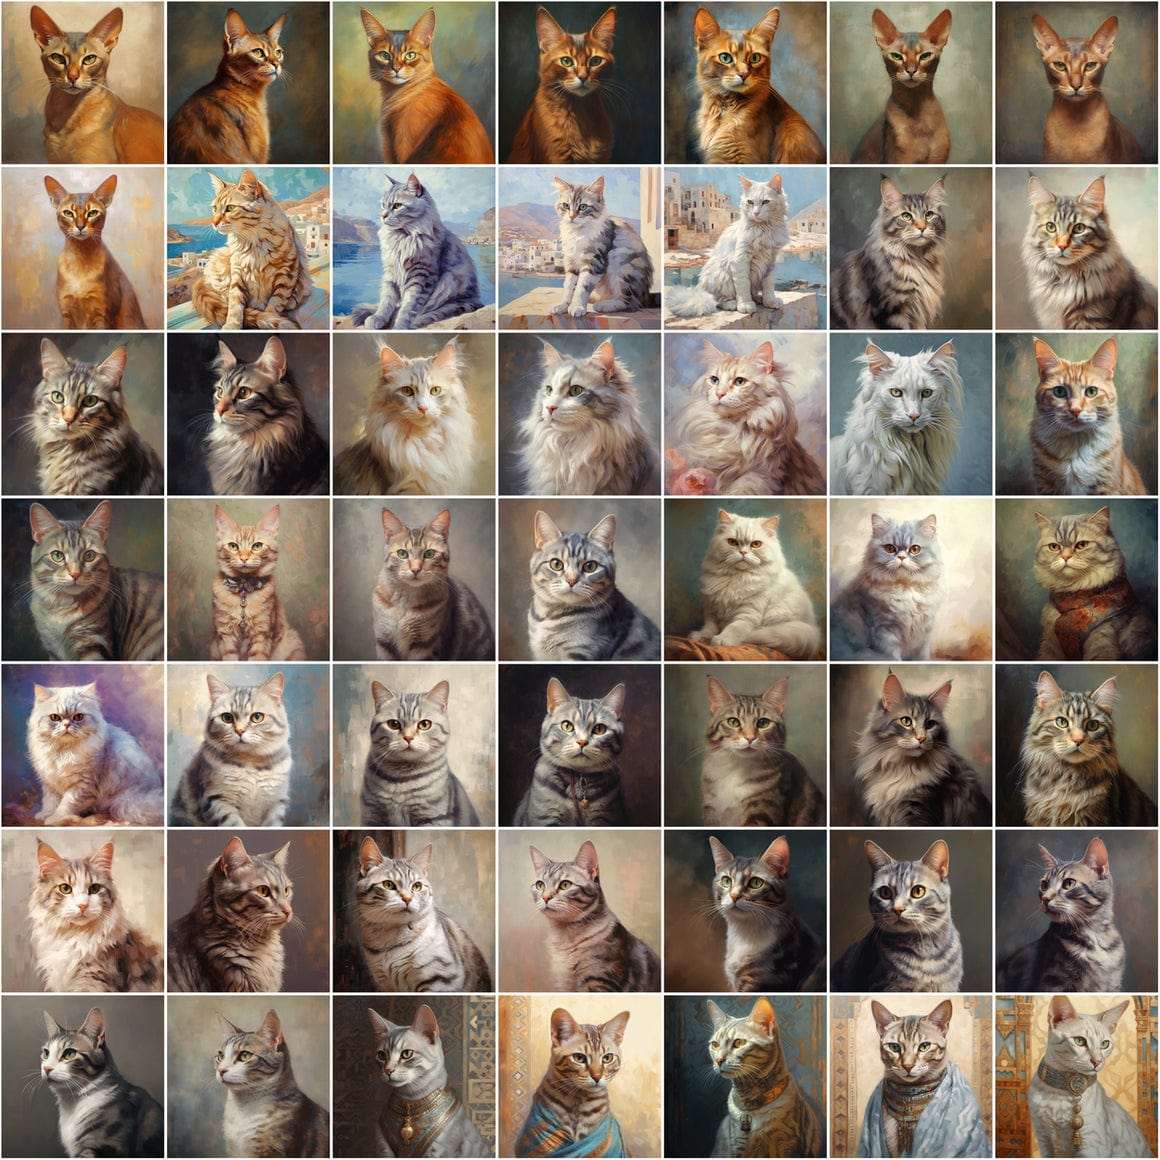 Digital Cat Art Collection - High Resolution Oil Paint Look Images Digital Download Sumobundle